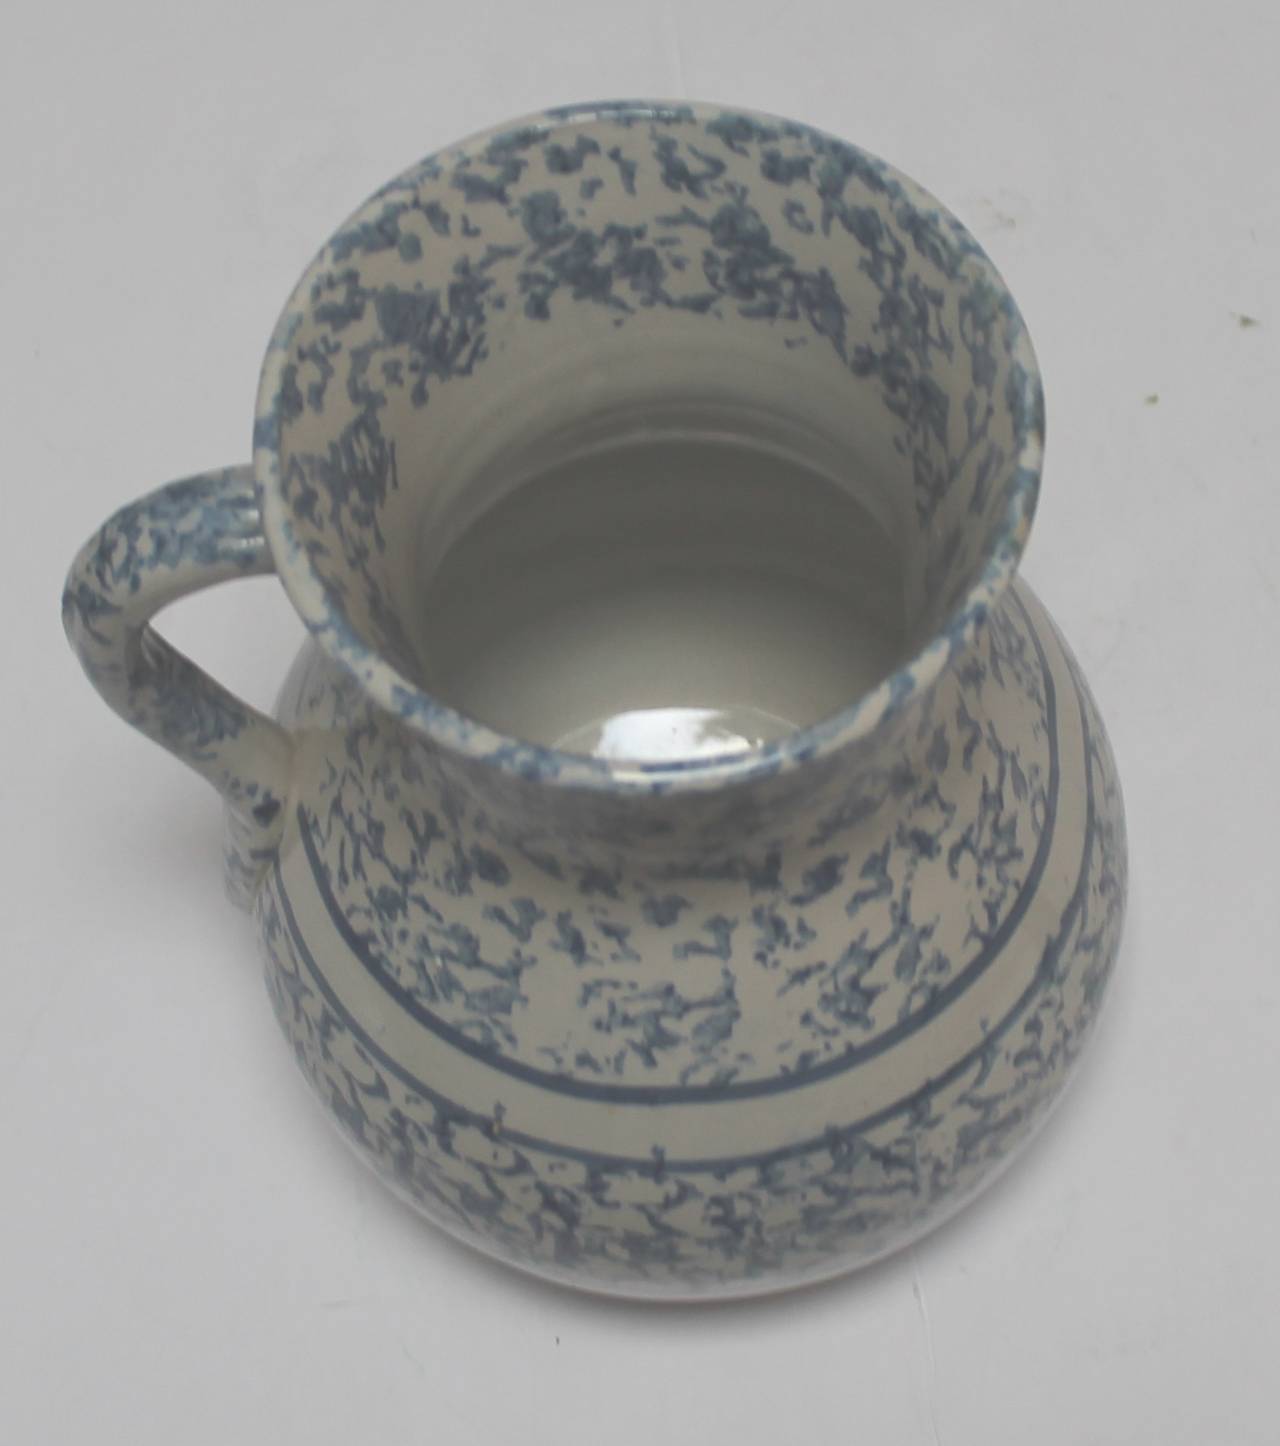 19th century pottery